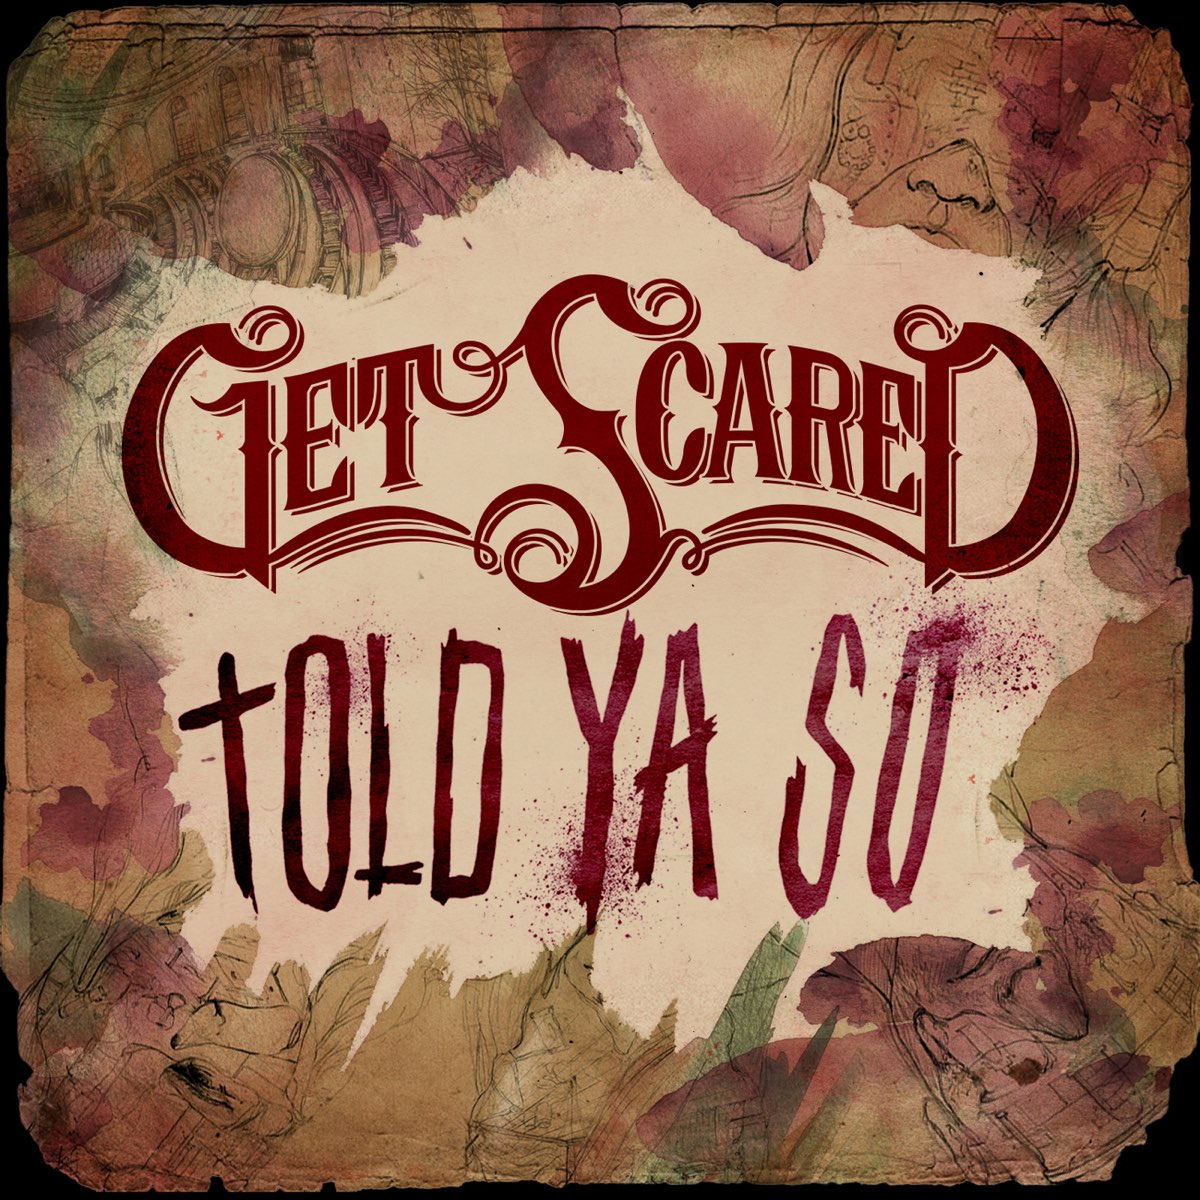 Get scared альбомы. Get scared обложка. Джоэл Фавьер get scared. Постер get scared.